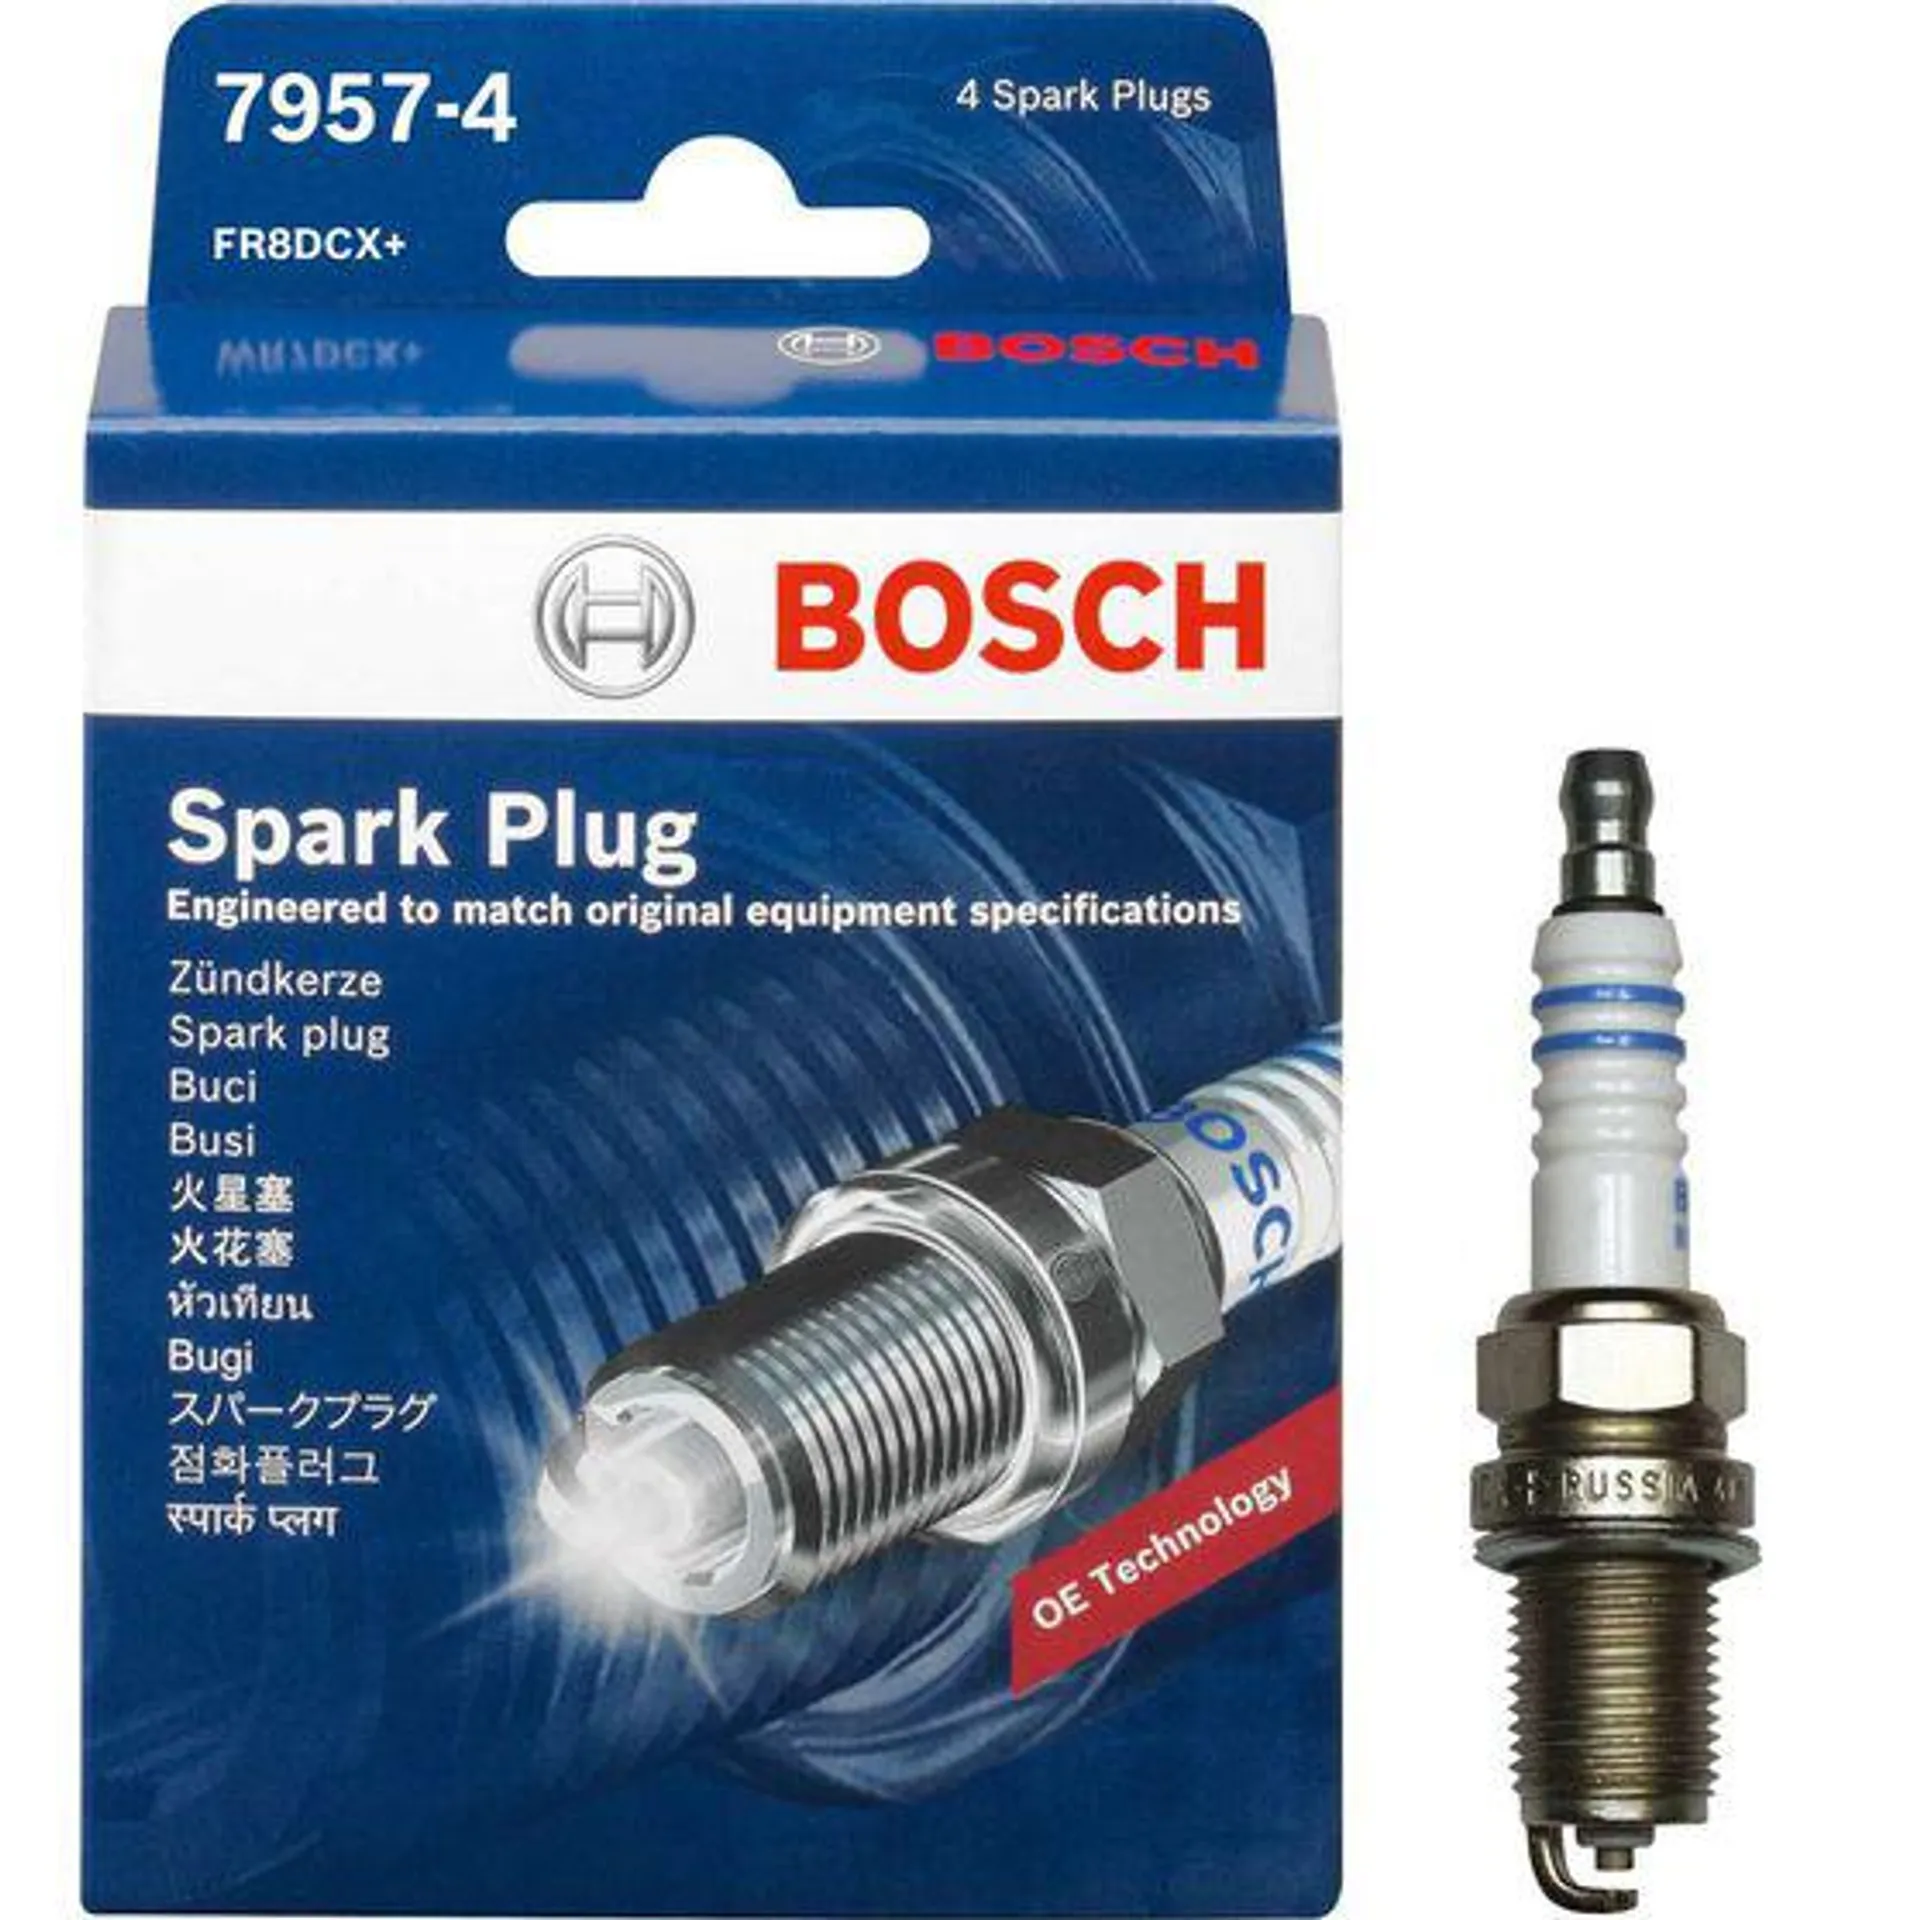 Bosch Spark Plug 7957-4 4 Pack